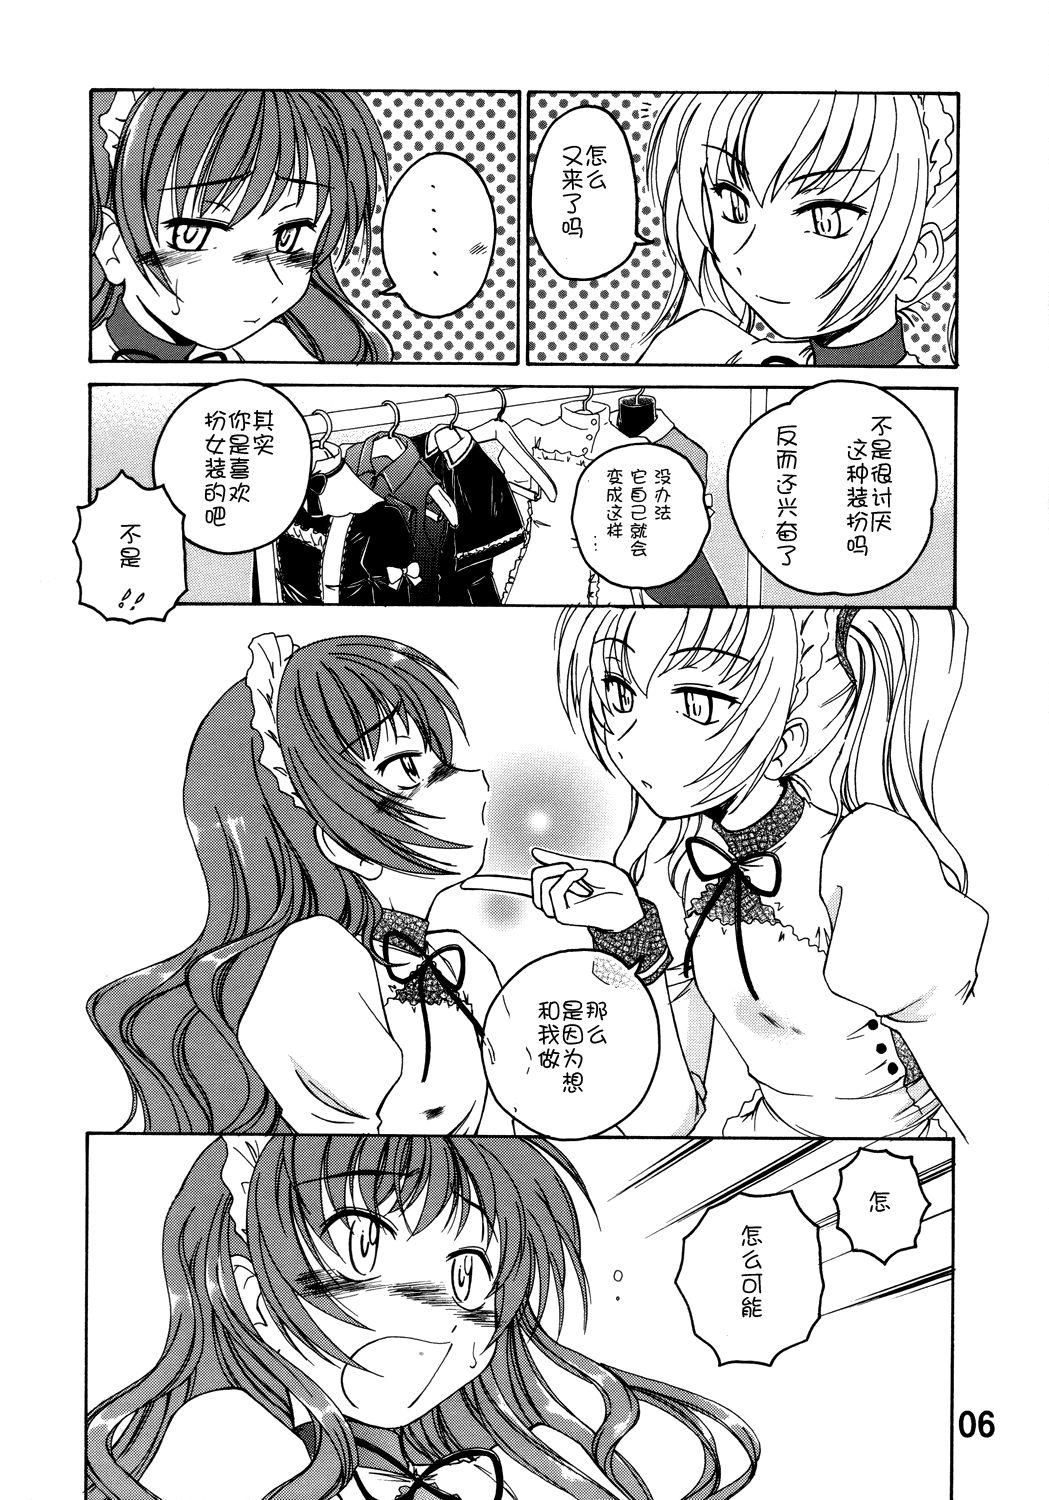 Tinytits Manga Sangyou Haikibutsu 11 - Comic Industrial Wastes 11 - Princess princess Dick Sucking Porn - Page 5